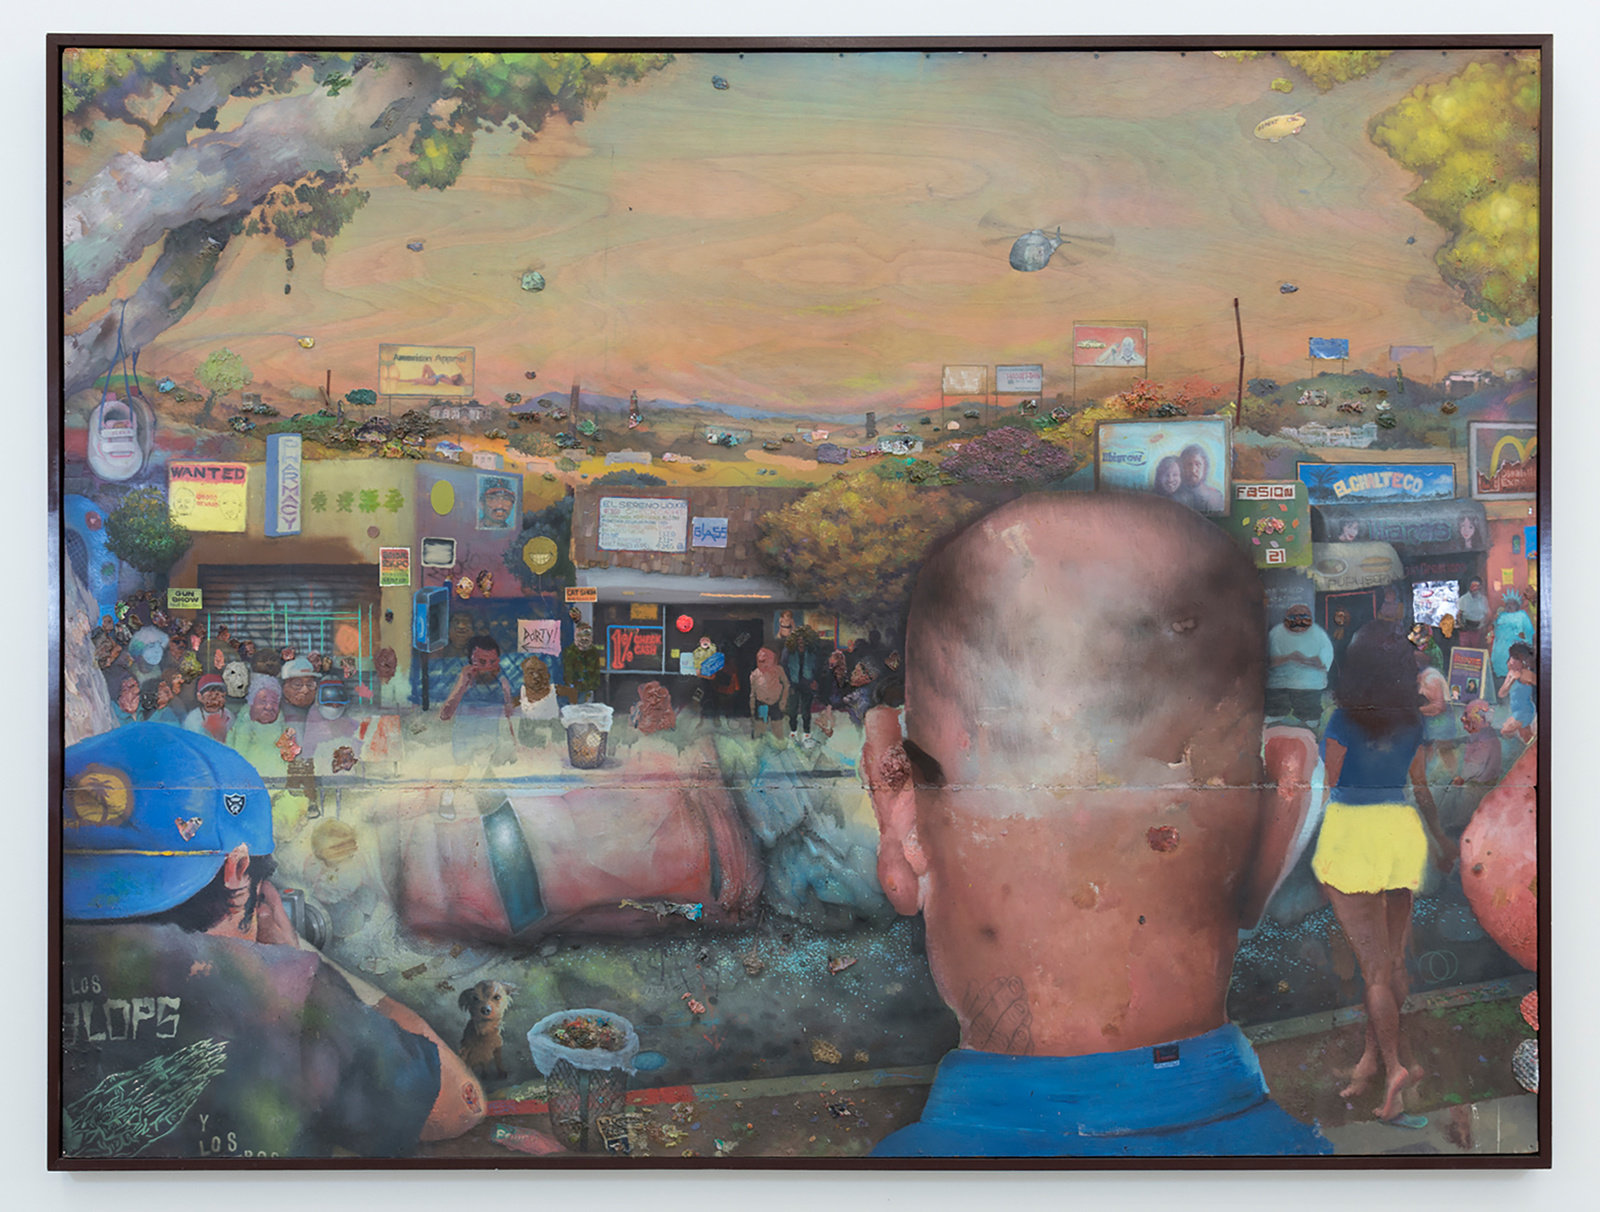 Alvarez, neighborhood watch, 2012, mixed media on panel, 72 x 96 in., 182.9 x 243.8 cm, cnon 59.820